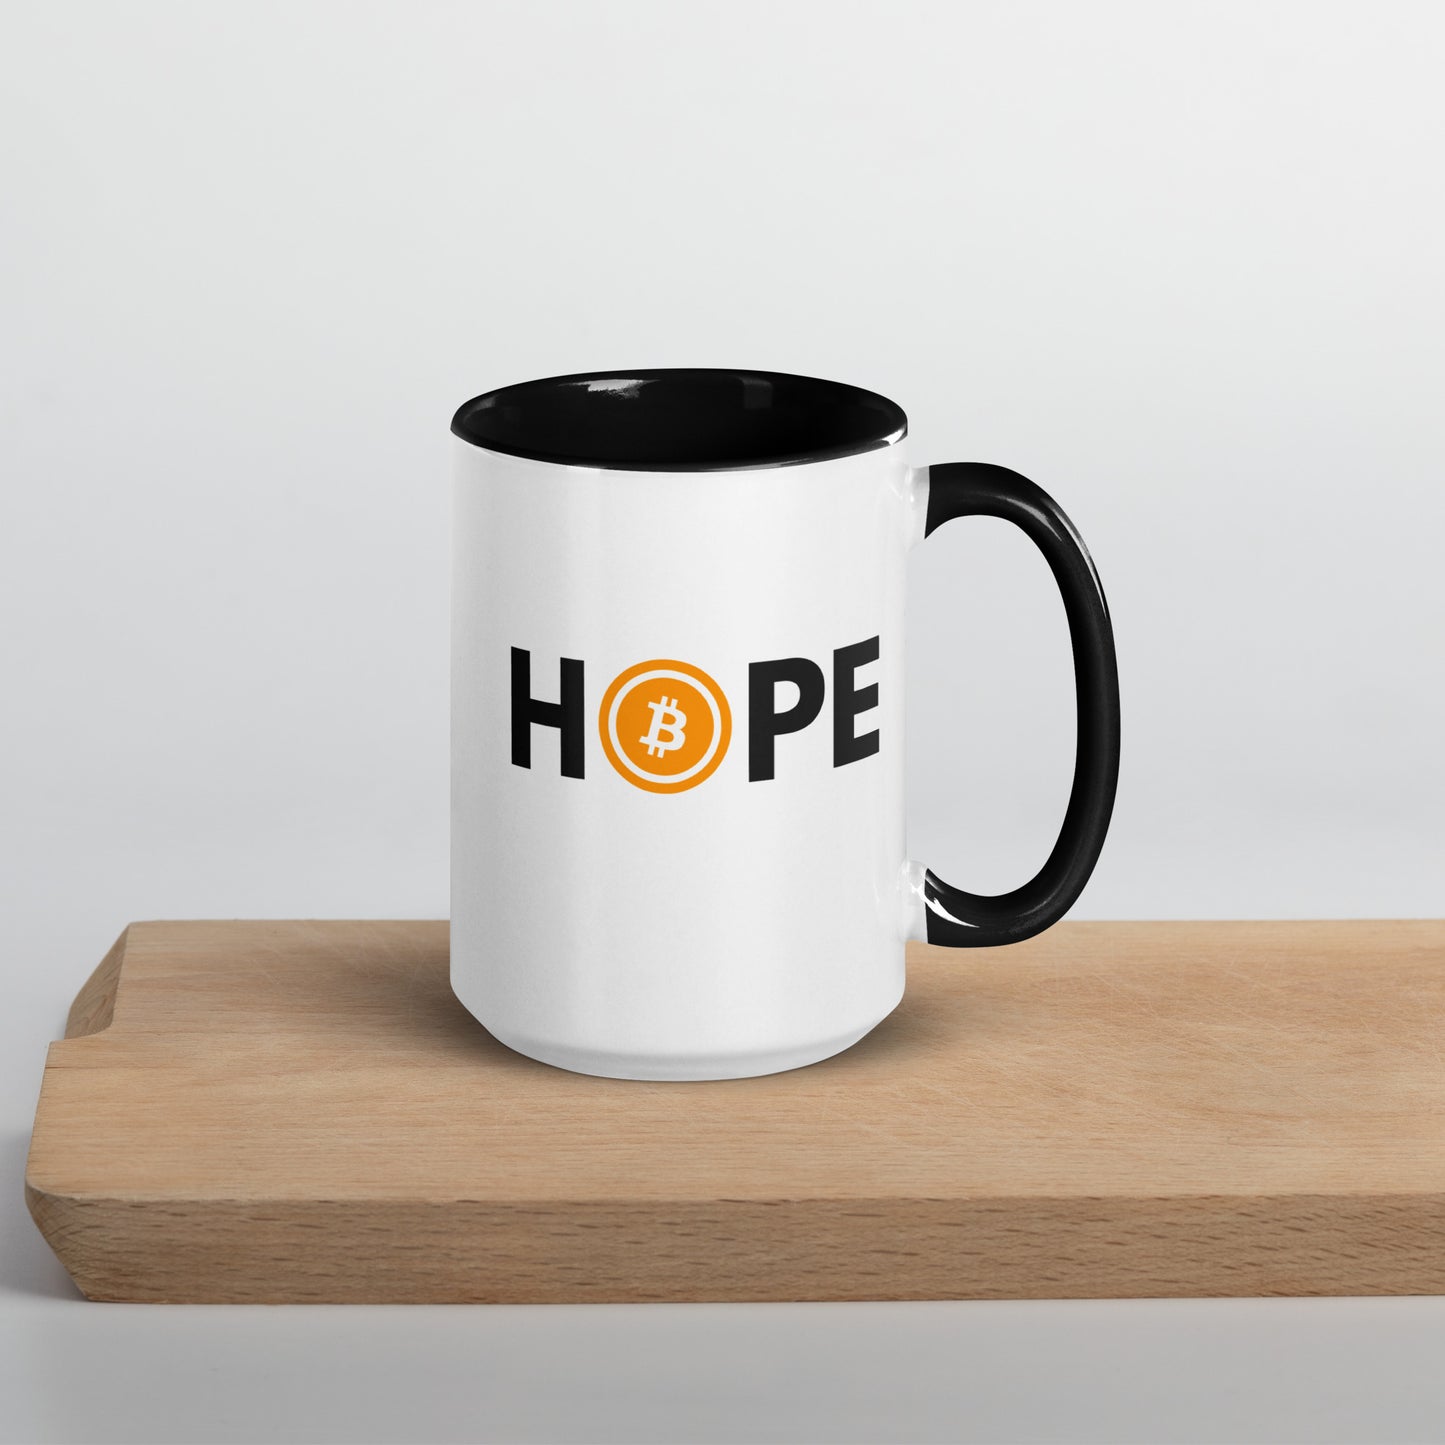 Bitcoin is Hope Mug with Color Inside